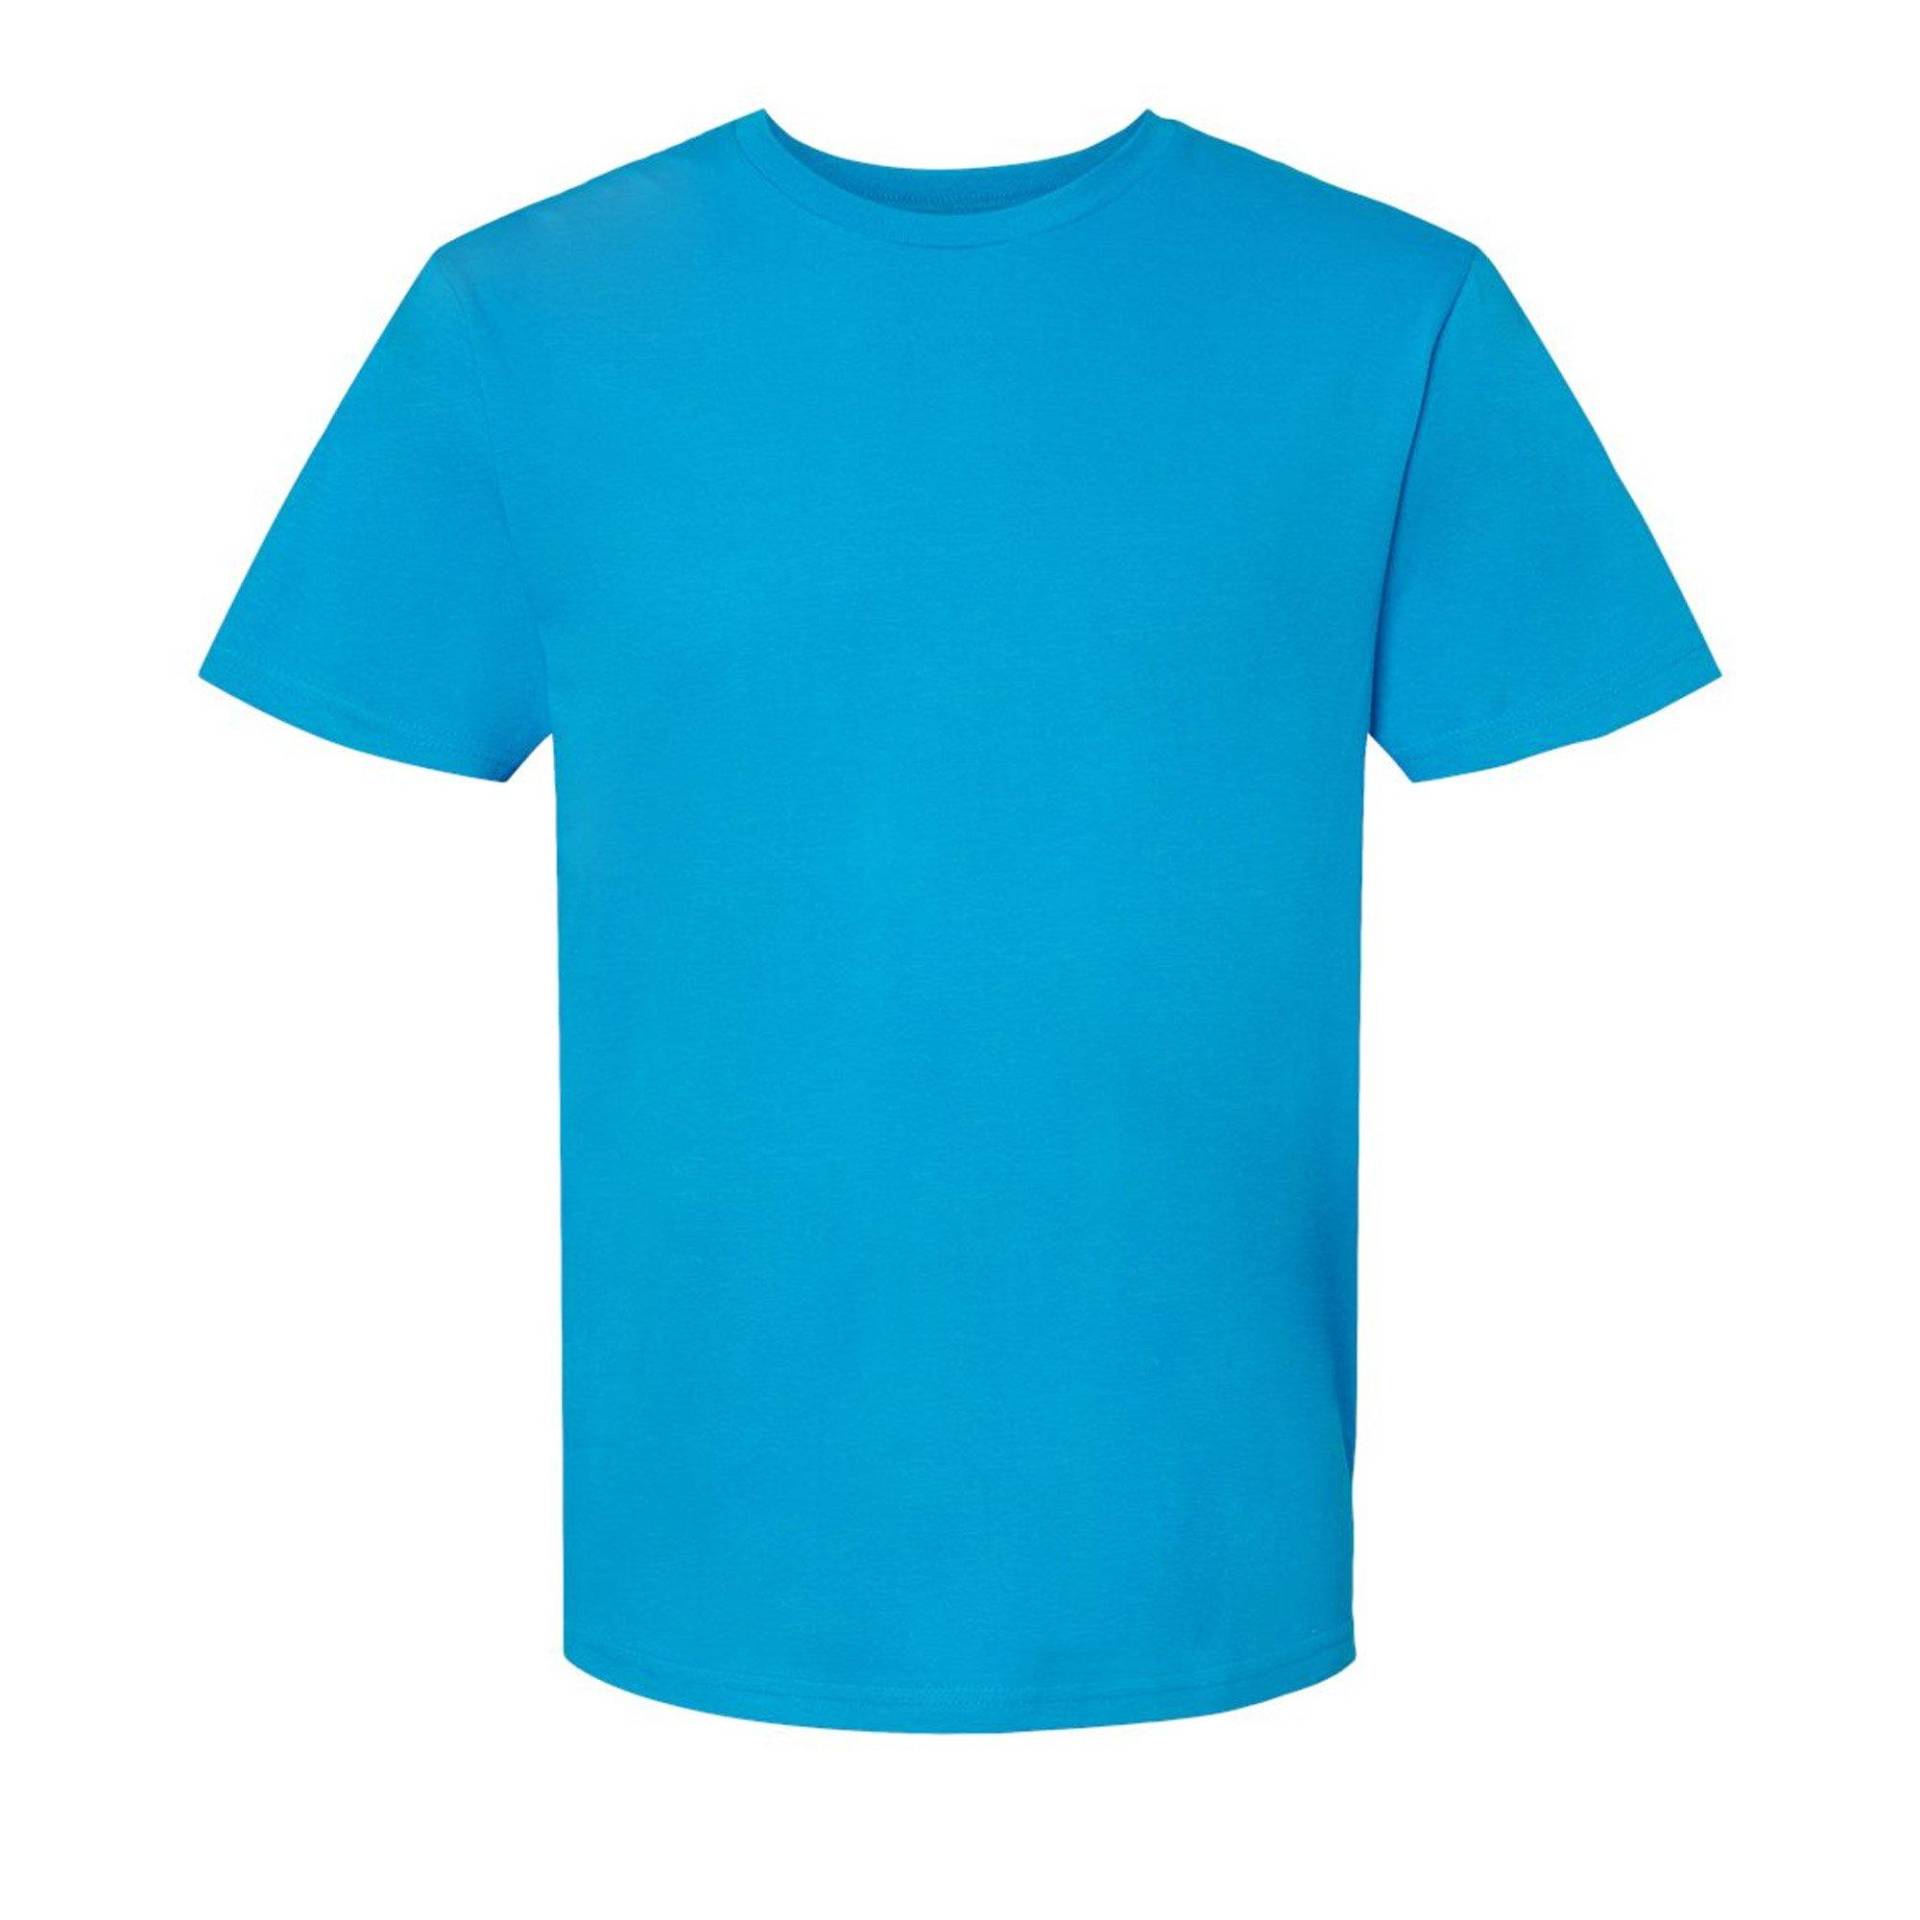 Softstyle Tshirt Damen Blau XL von Gildan